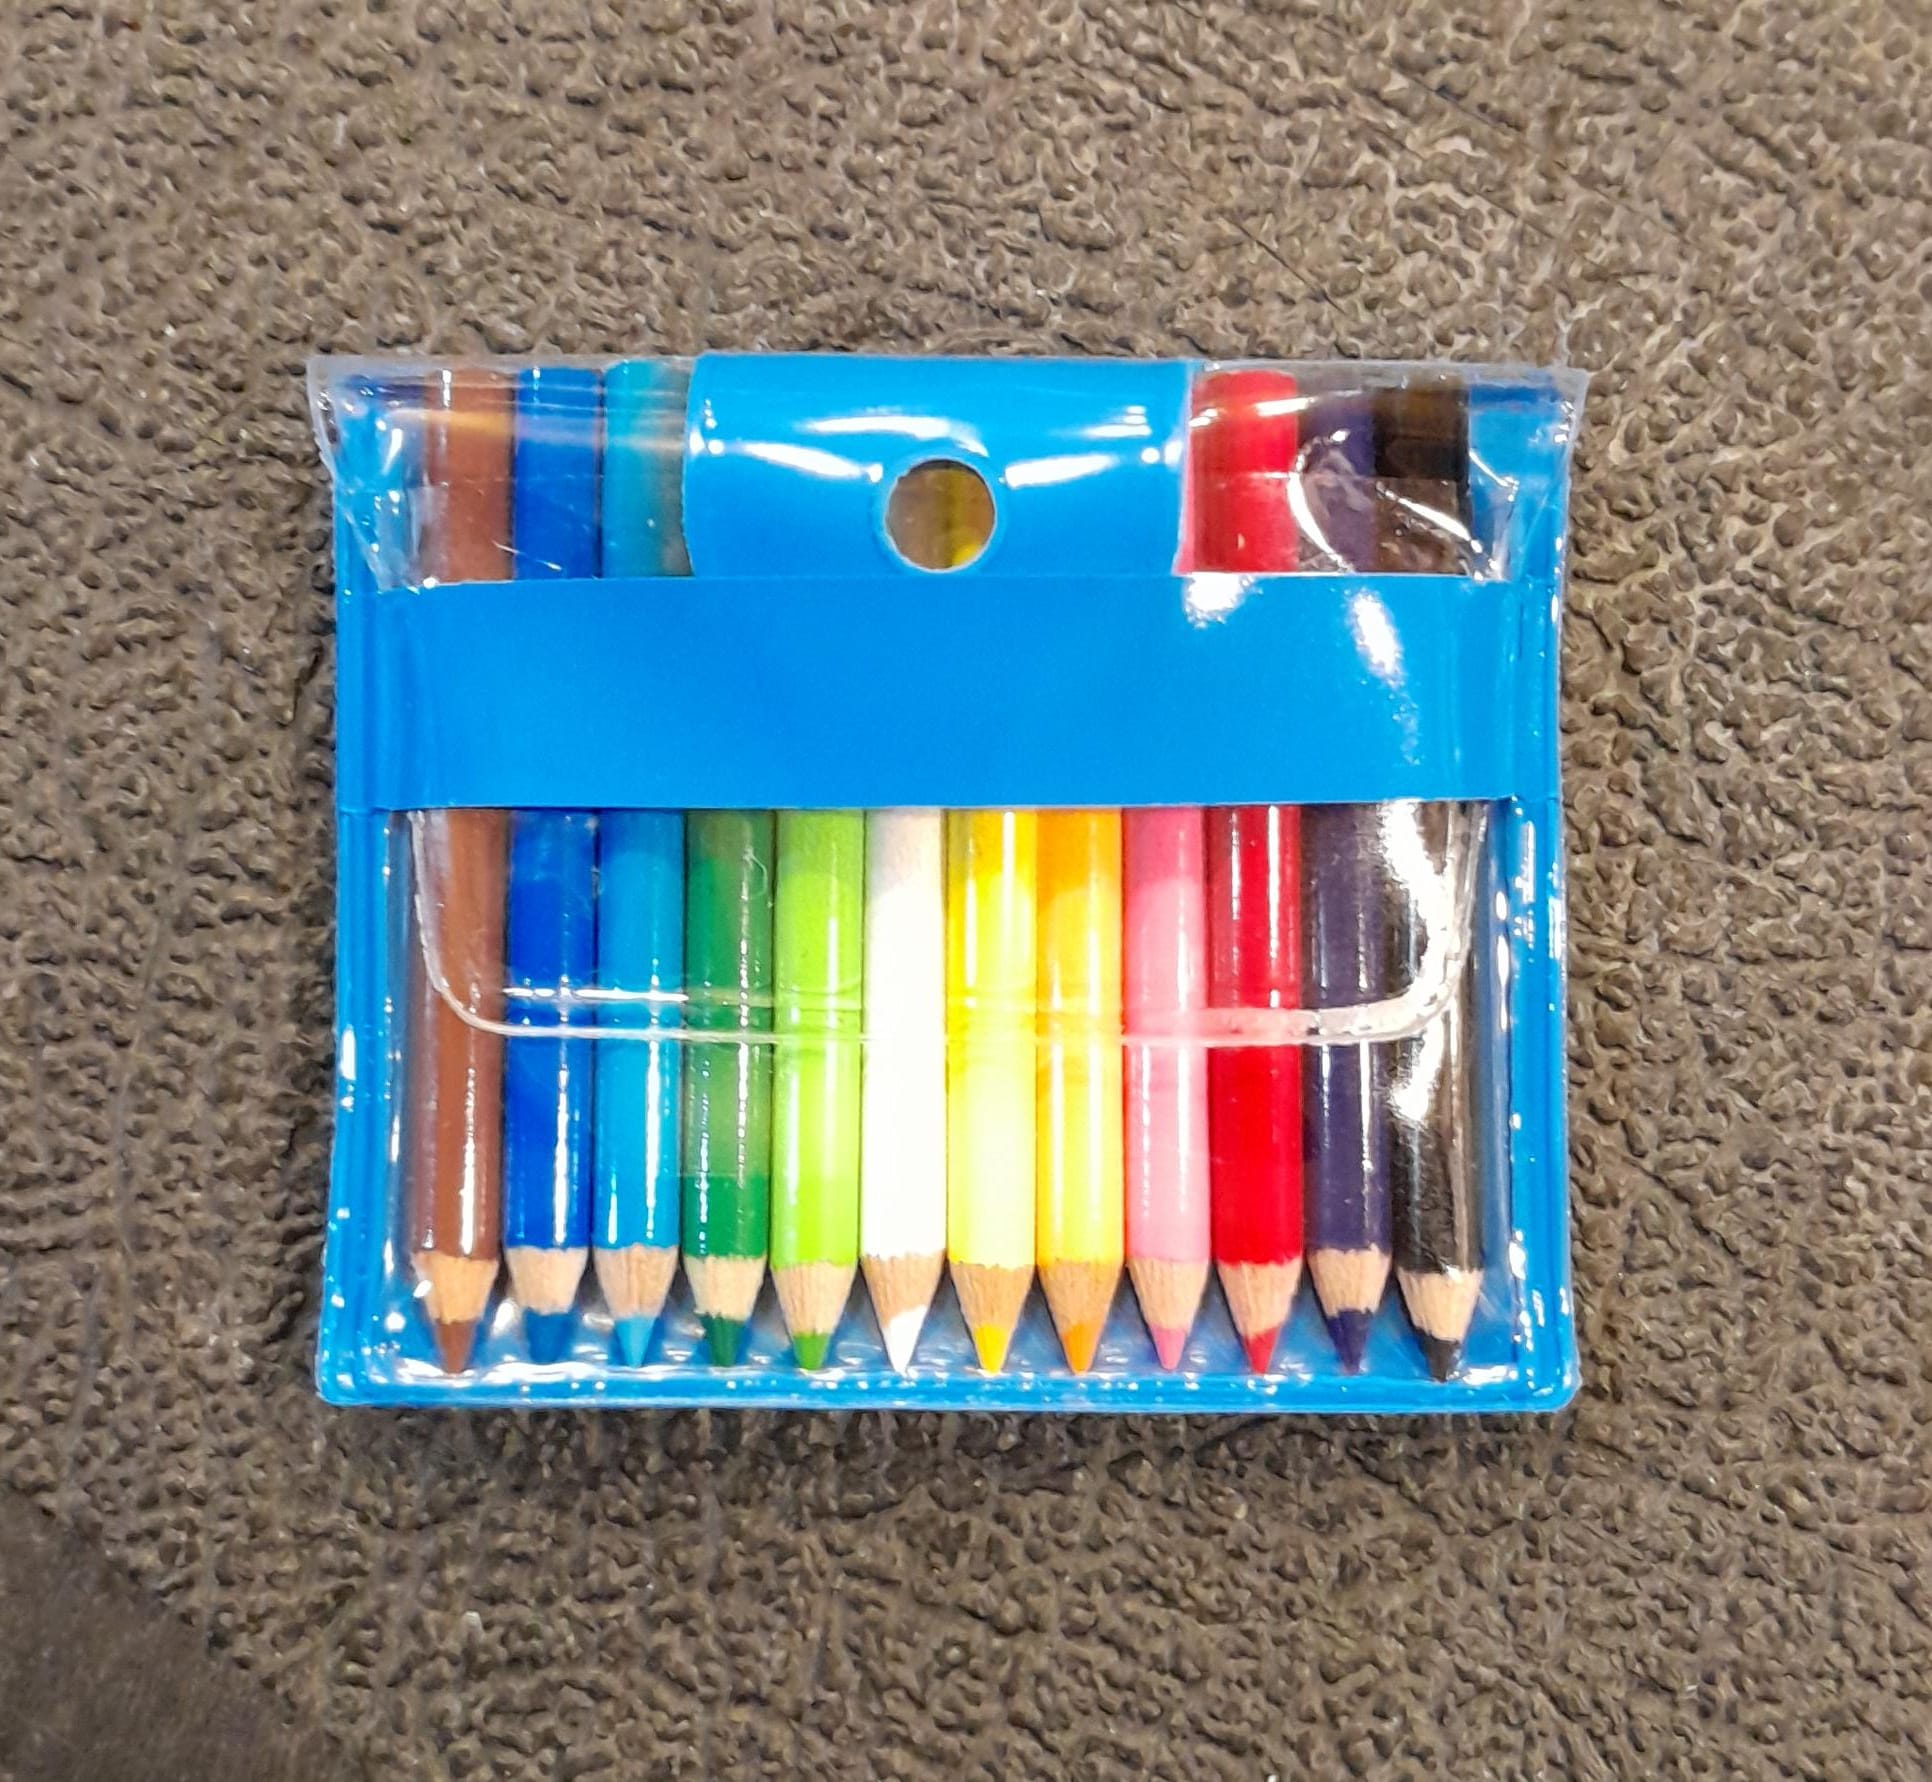 Mini Colored Pencils in Pouch P.O.P. Display